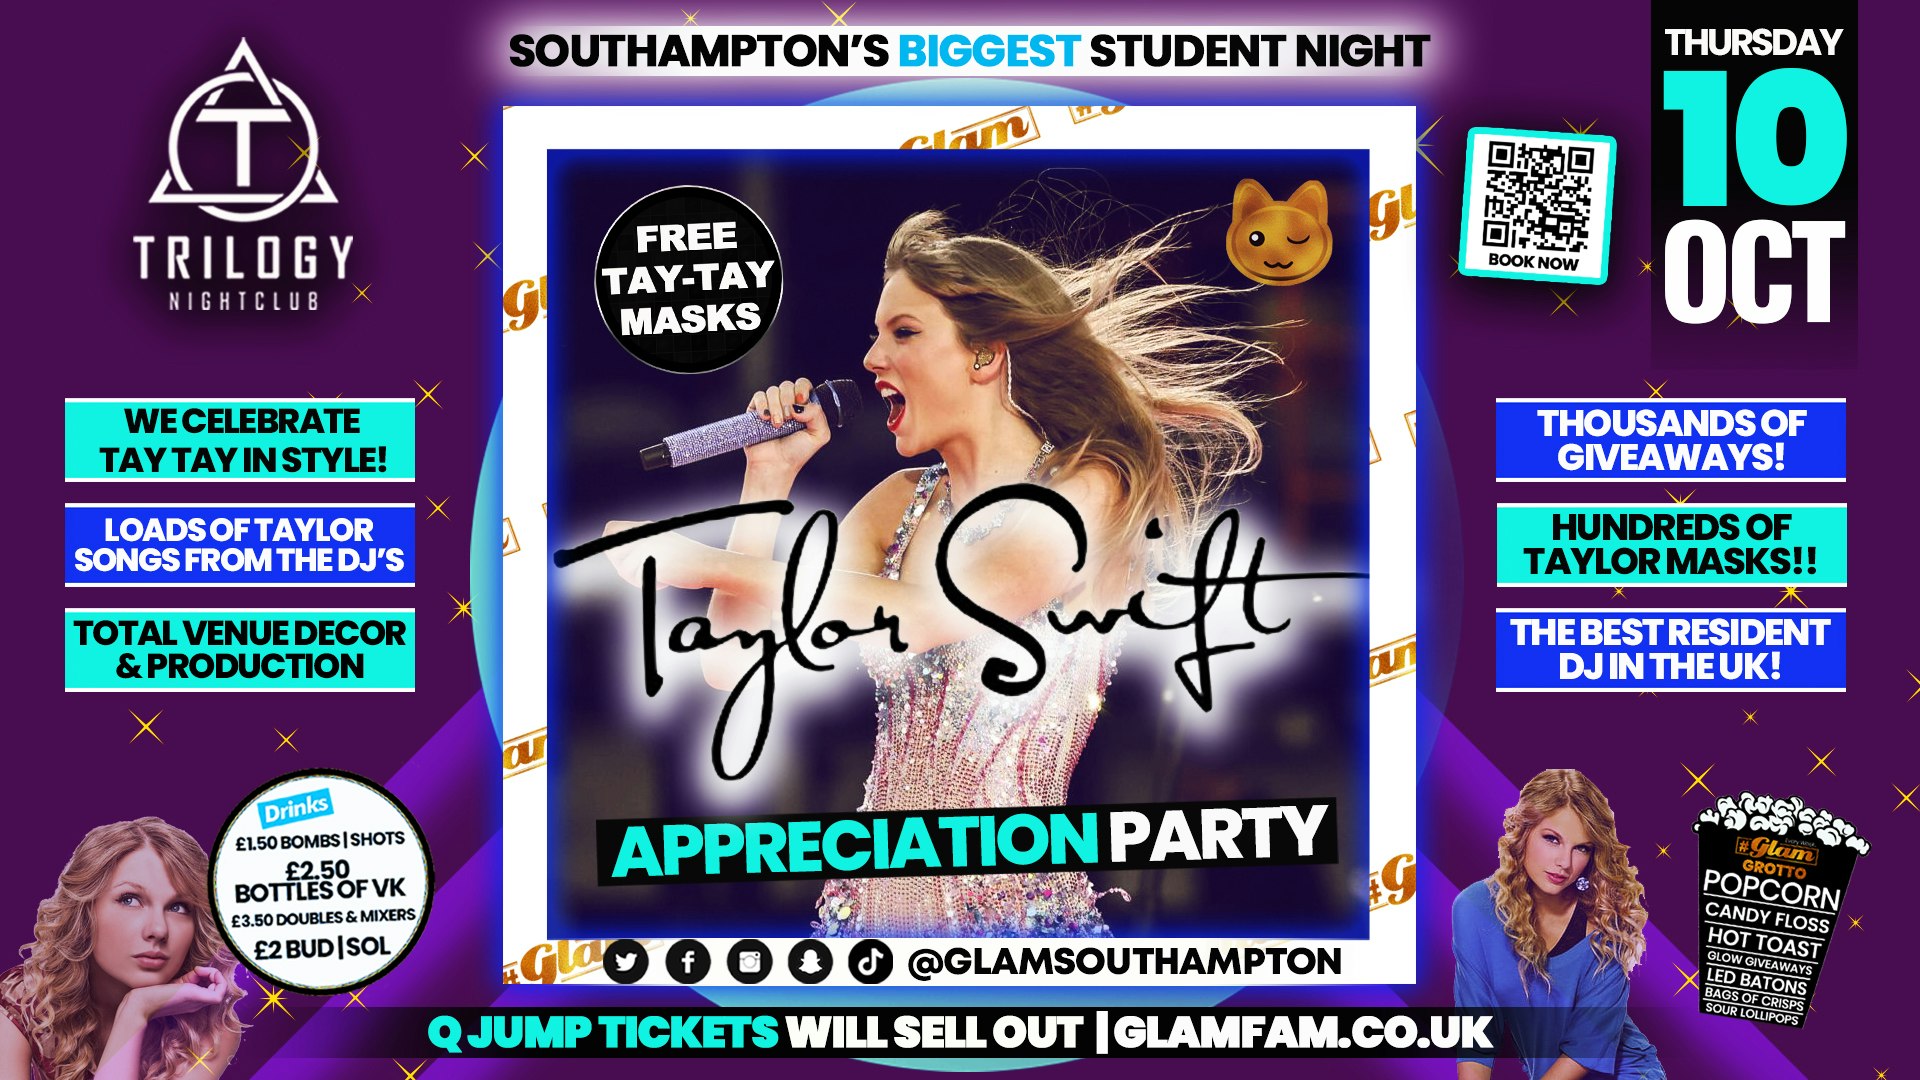 Glam -💃 TAYLOR SWIFT APPRECIATION EVENT! 🤩 | Southampton’s Biggest Student Night